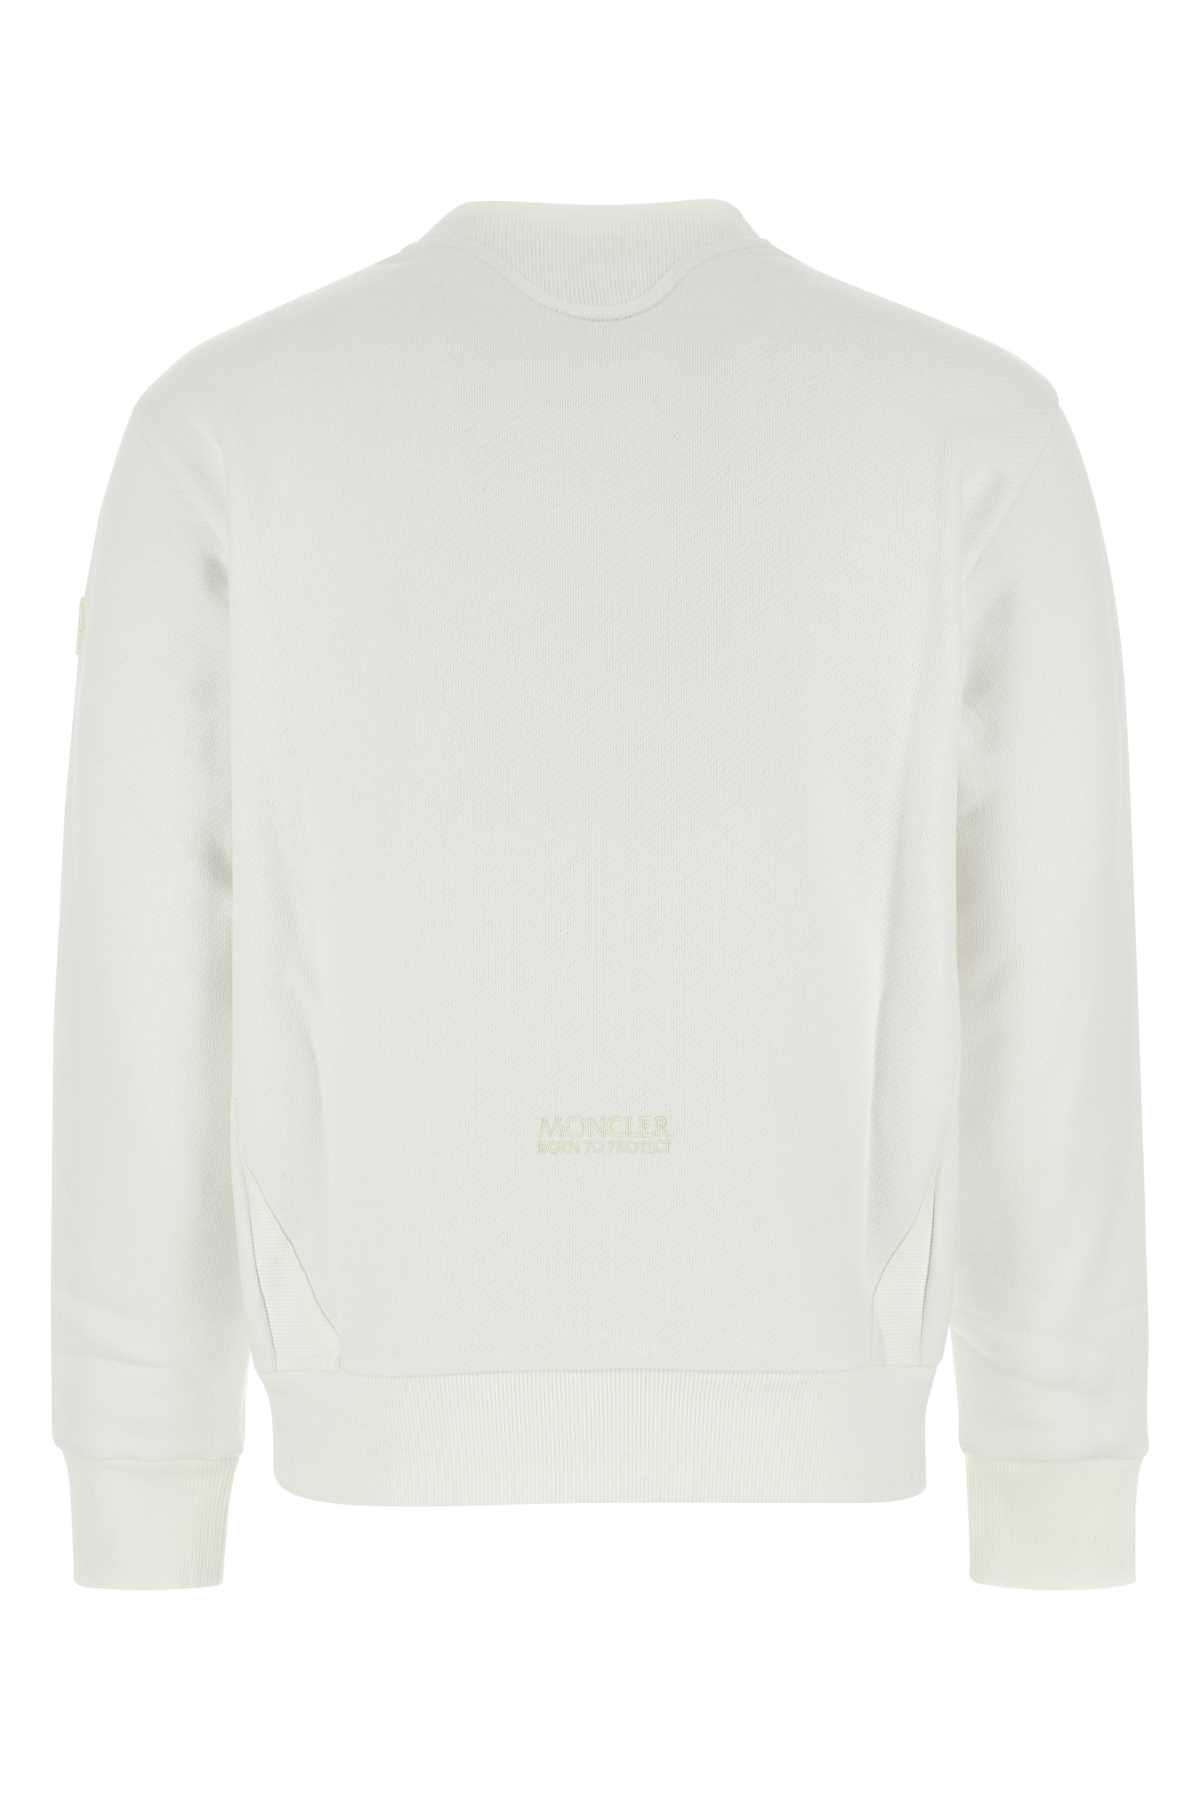 Moncler White Cotton Sweatshirt In 001